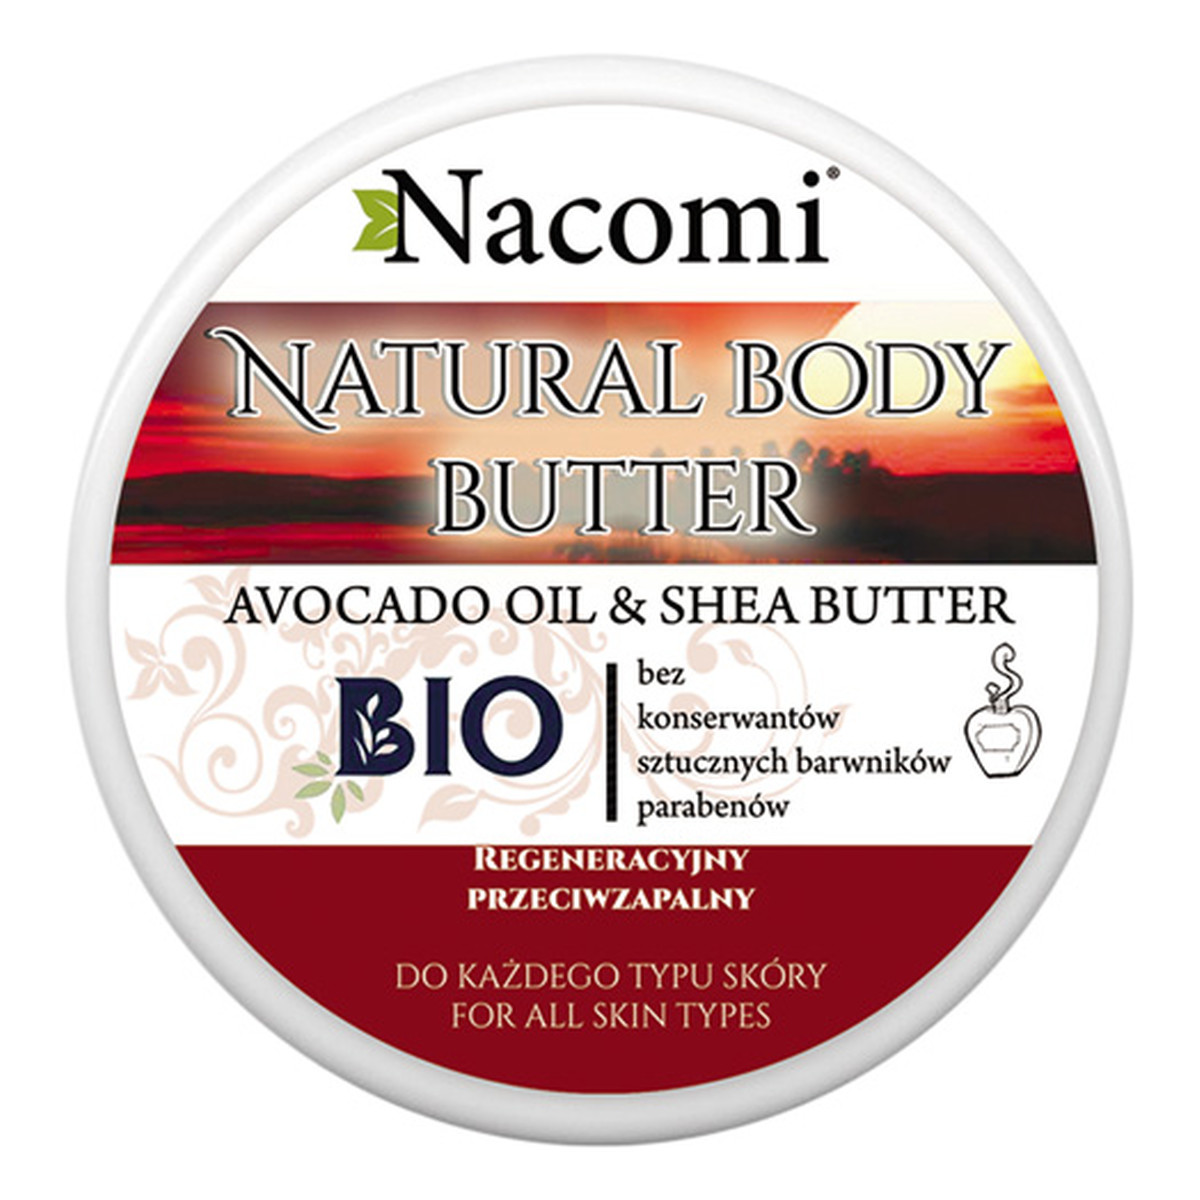 Nacomi Avocado Oil&Shea Butter Masło o Zapachu Piżma 100ml